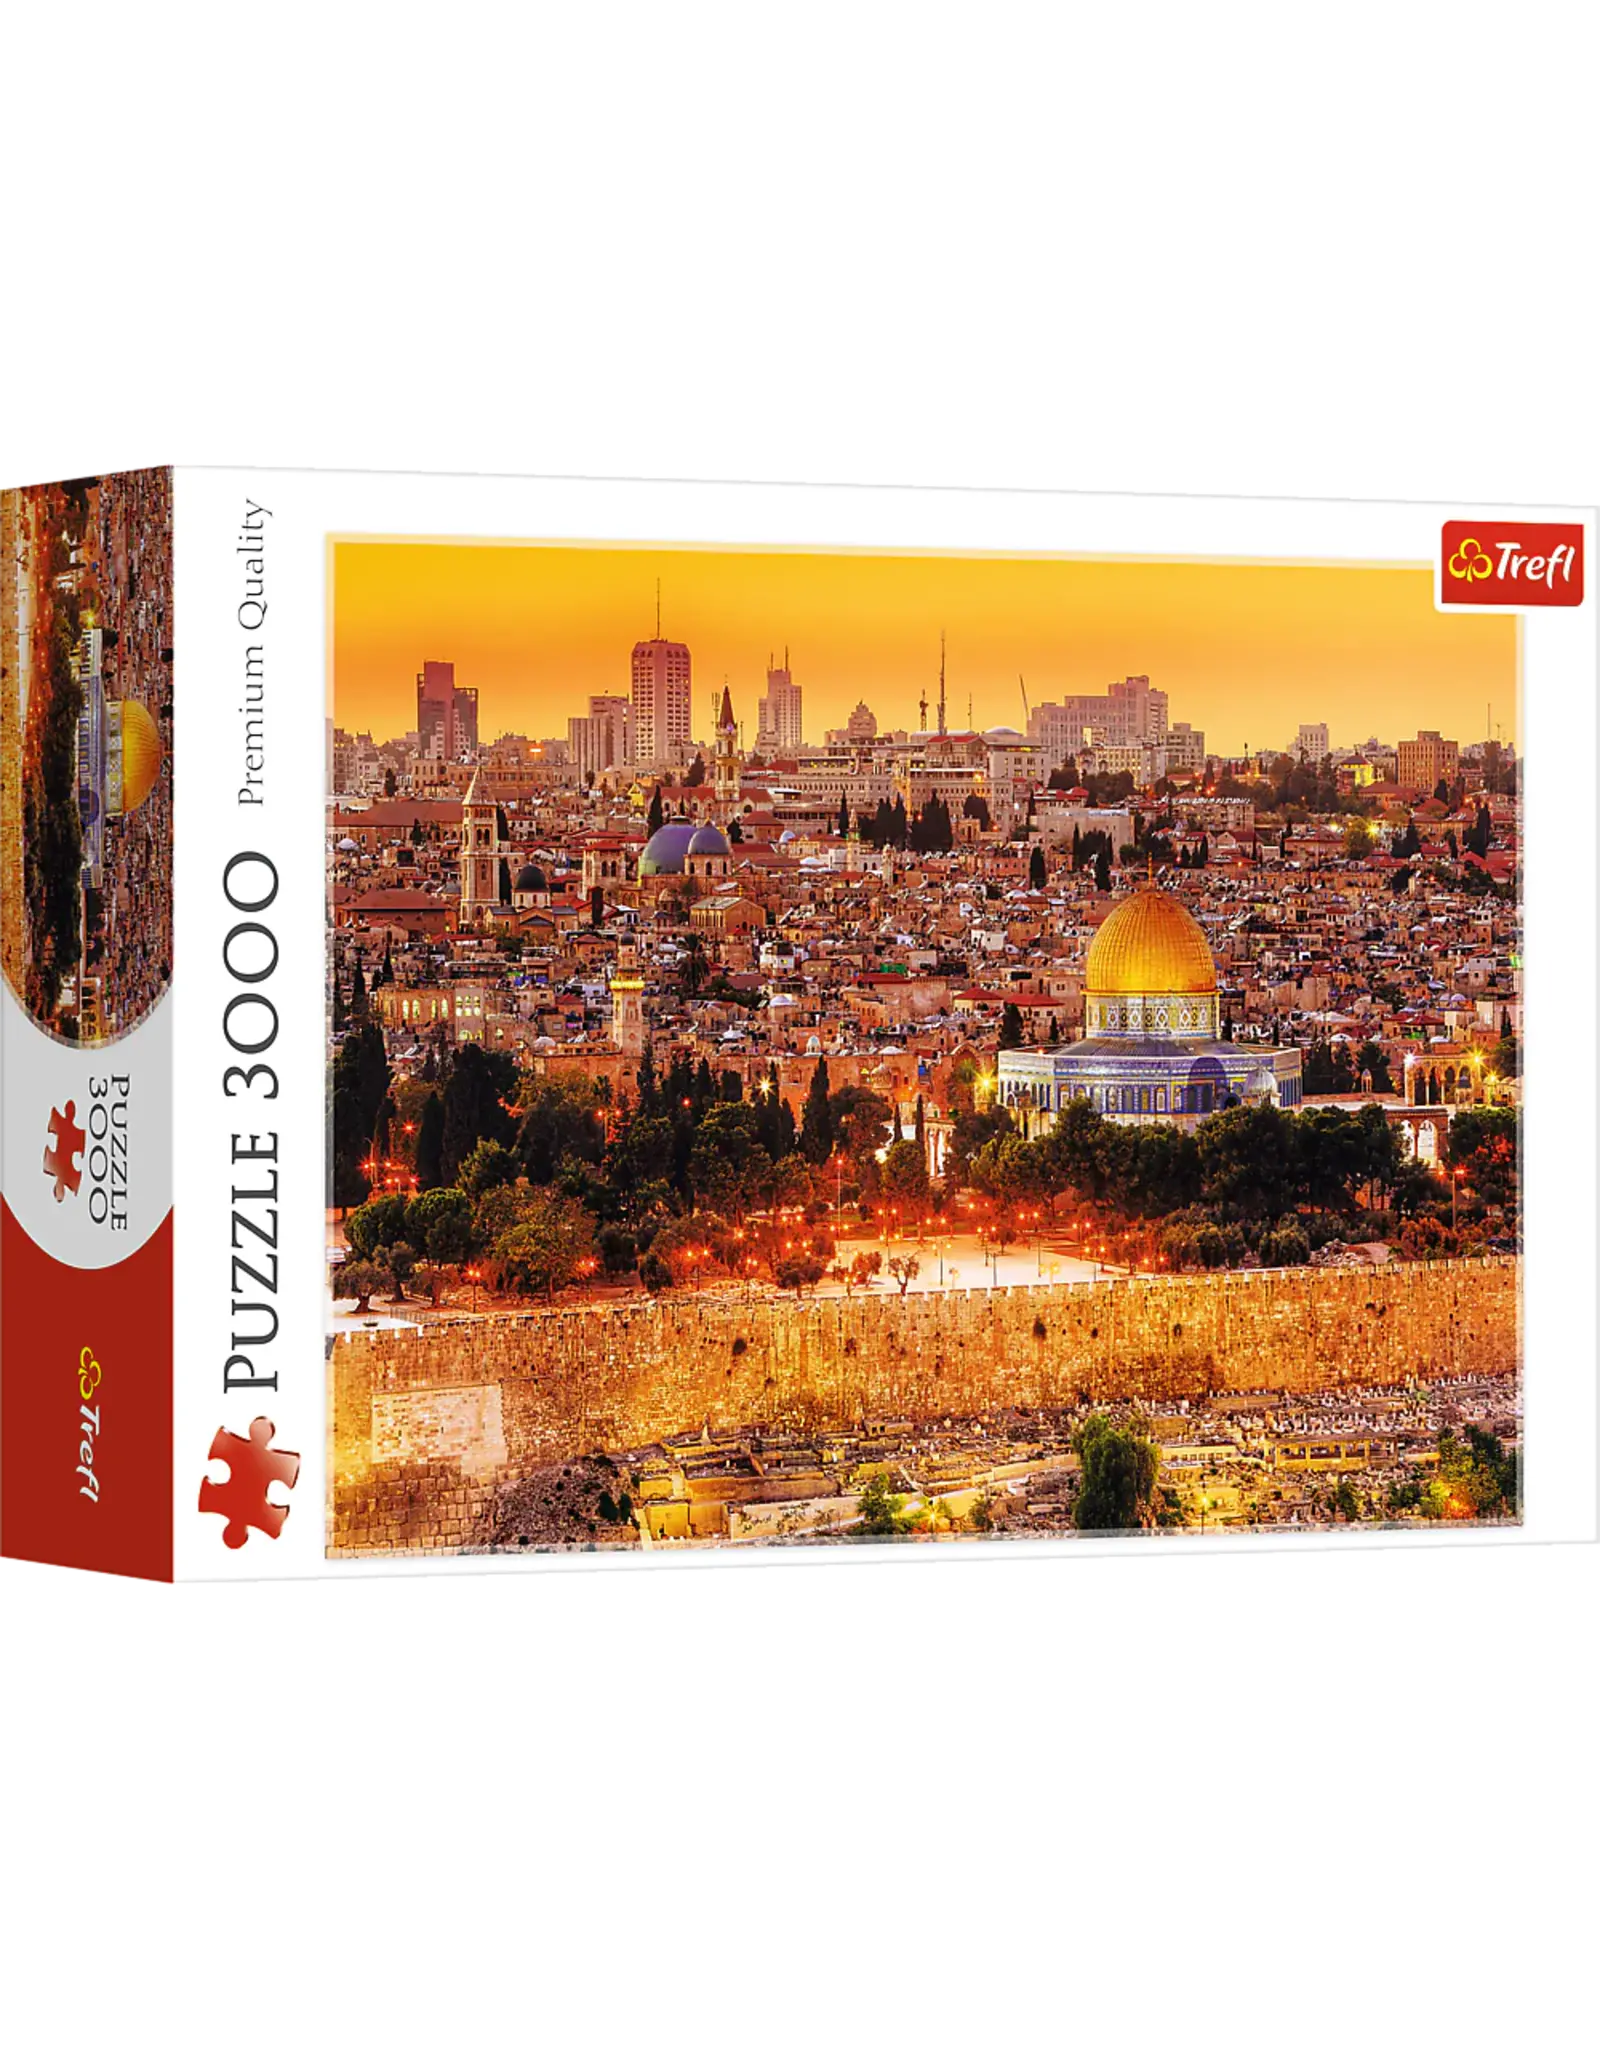 Trefl Puzzle: Roofs of Jerusalem 3000pc